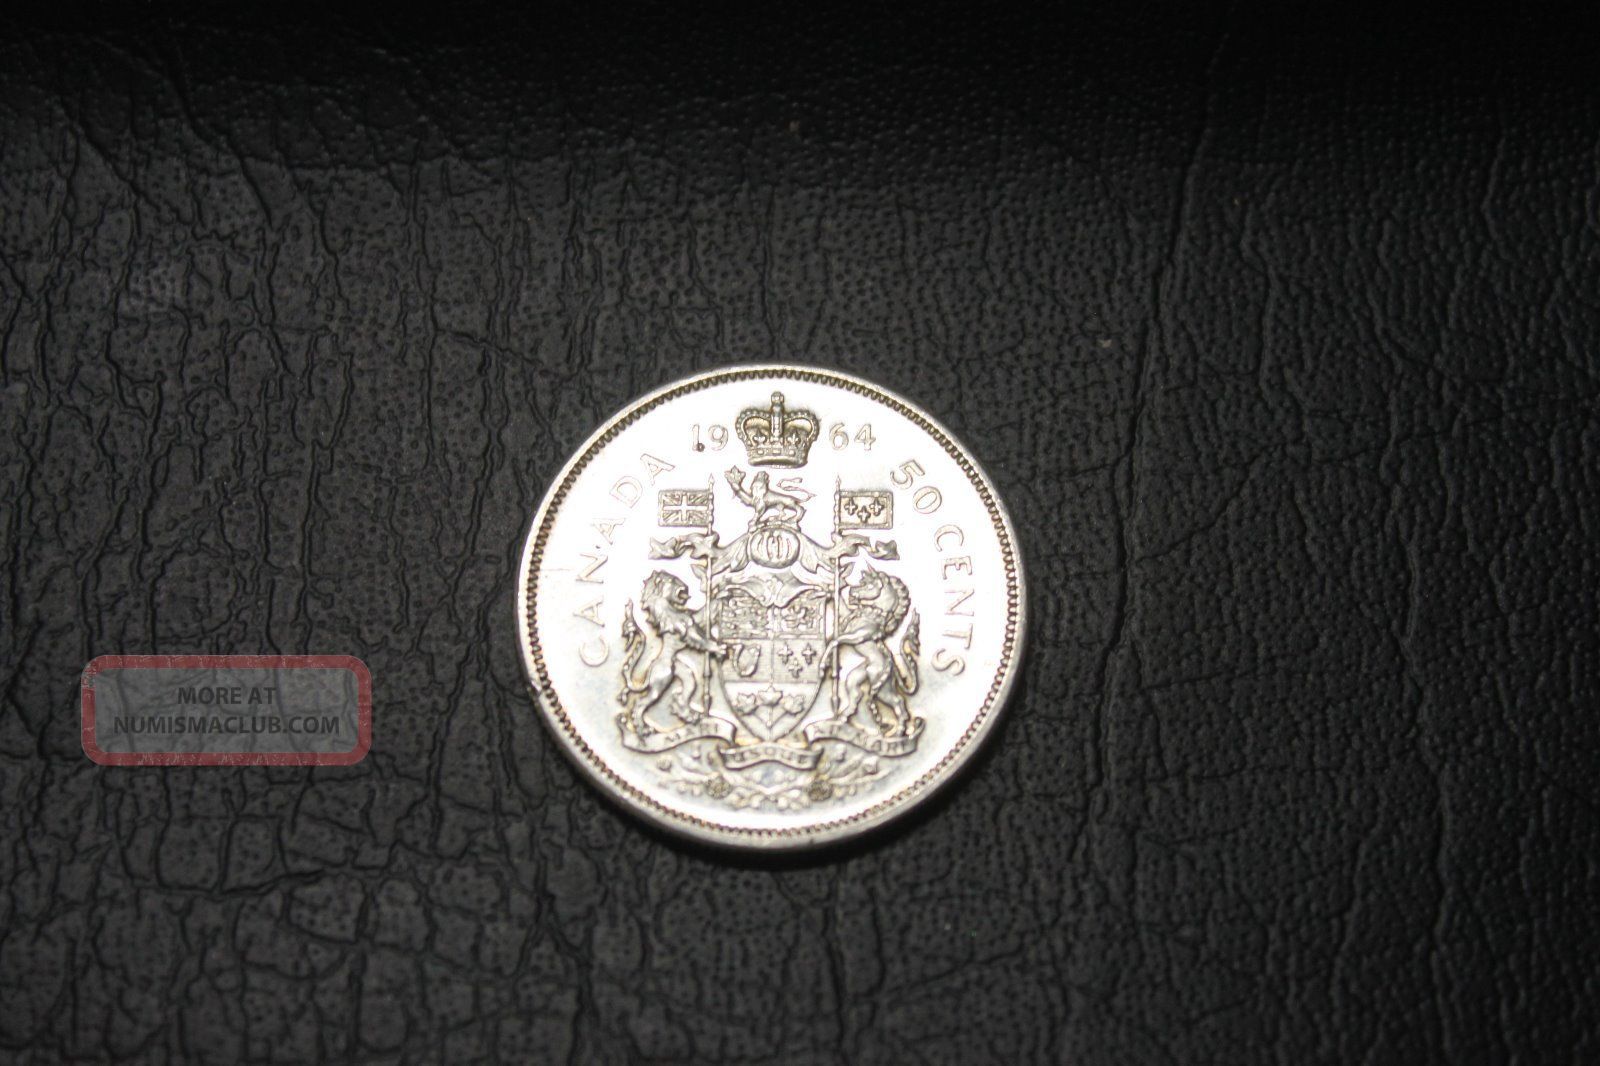 1 Canada Silver Half Dollar Coin